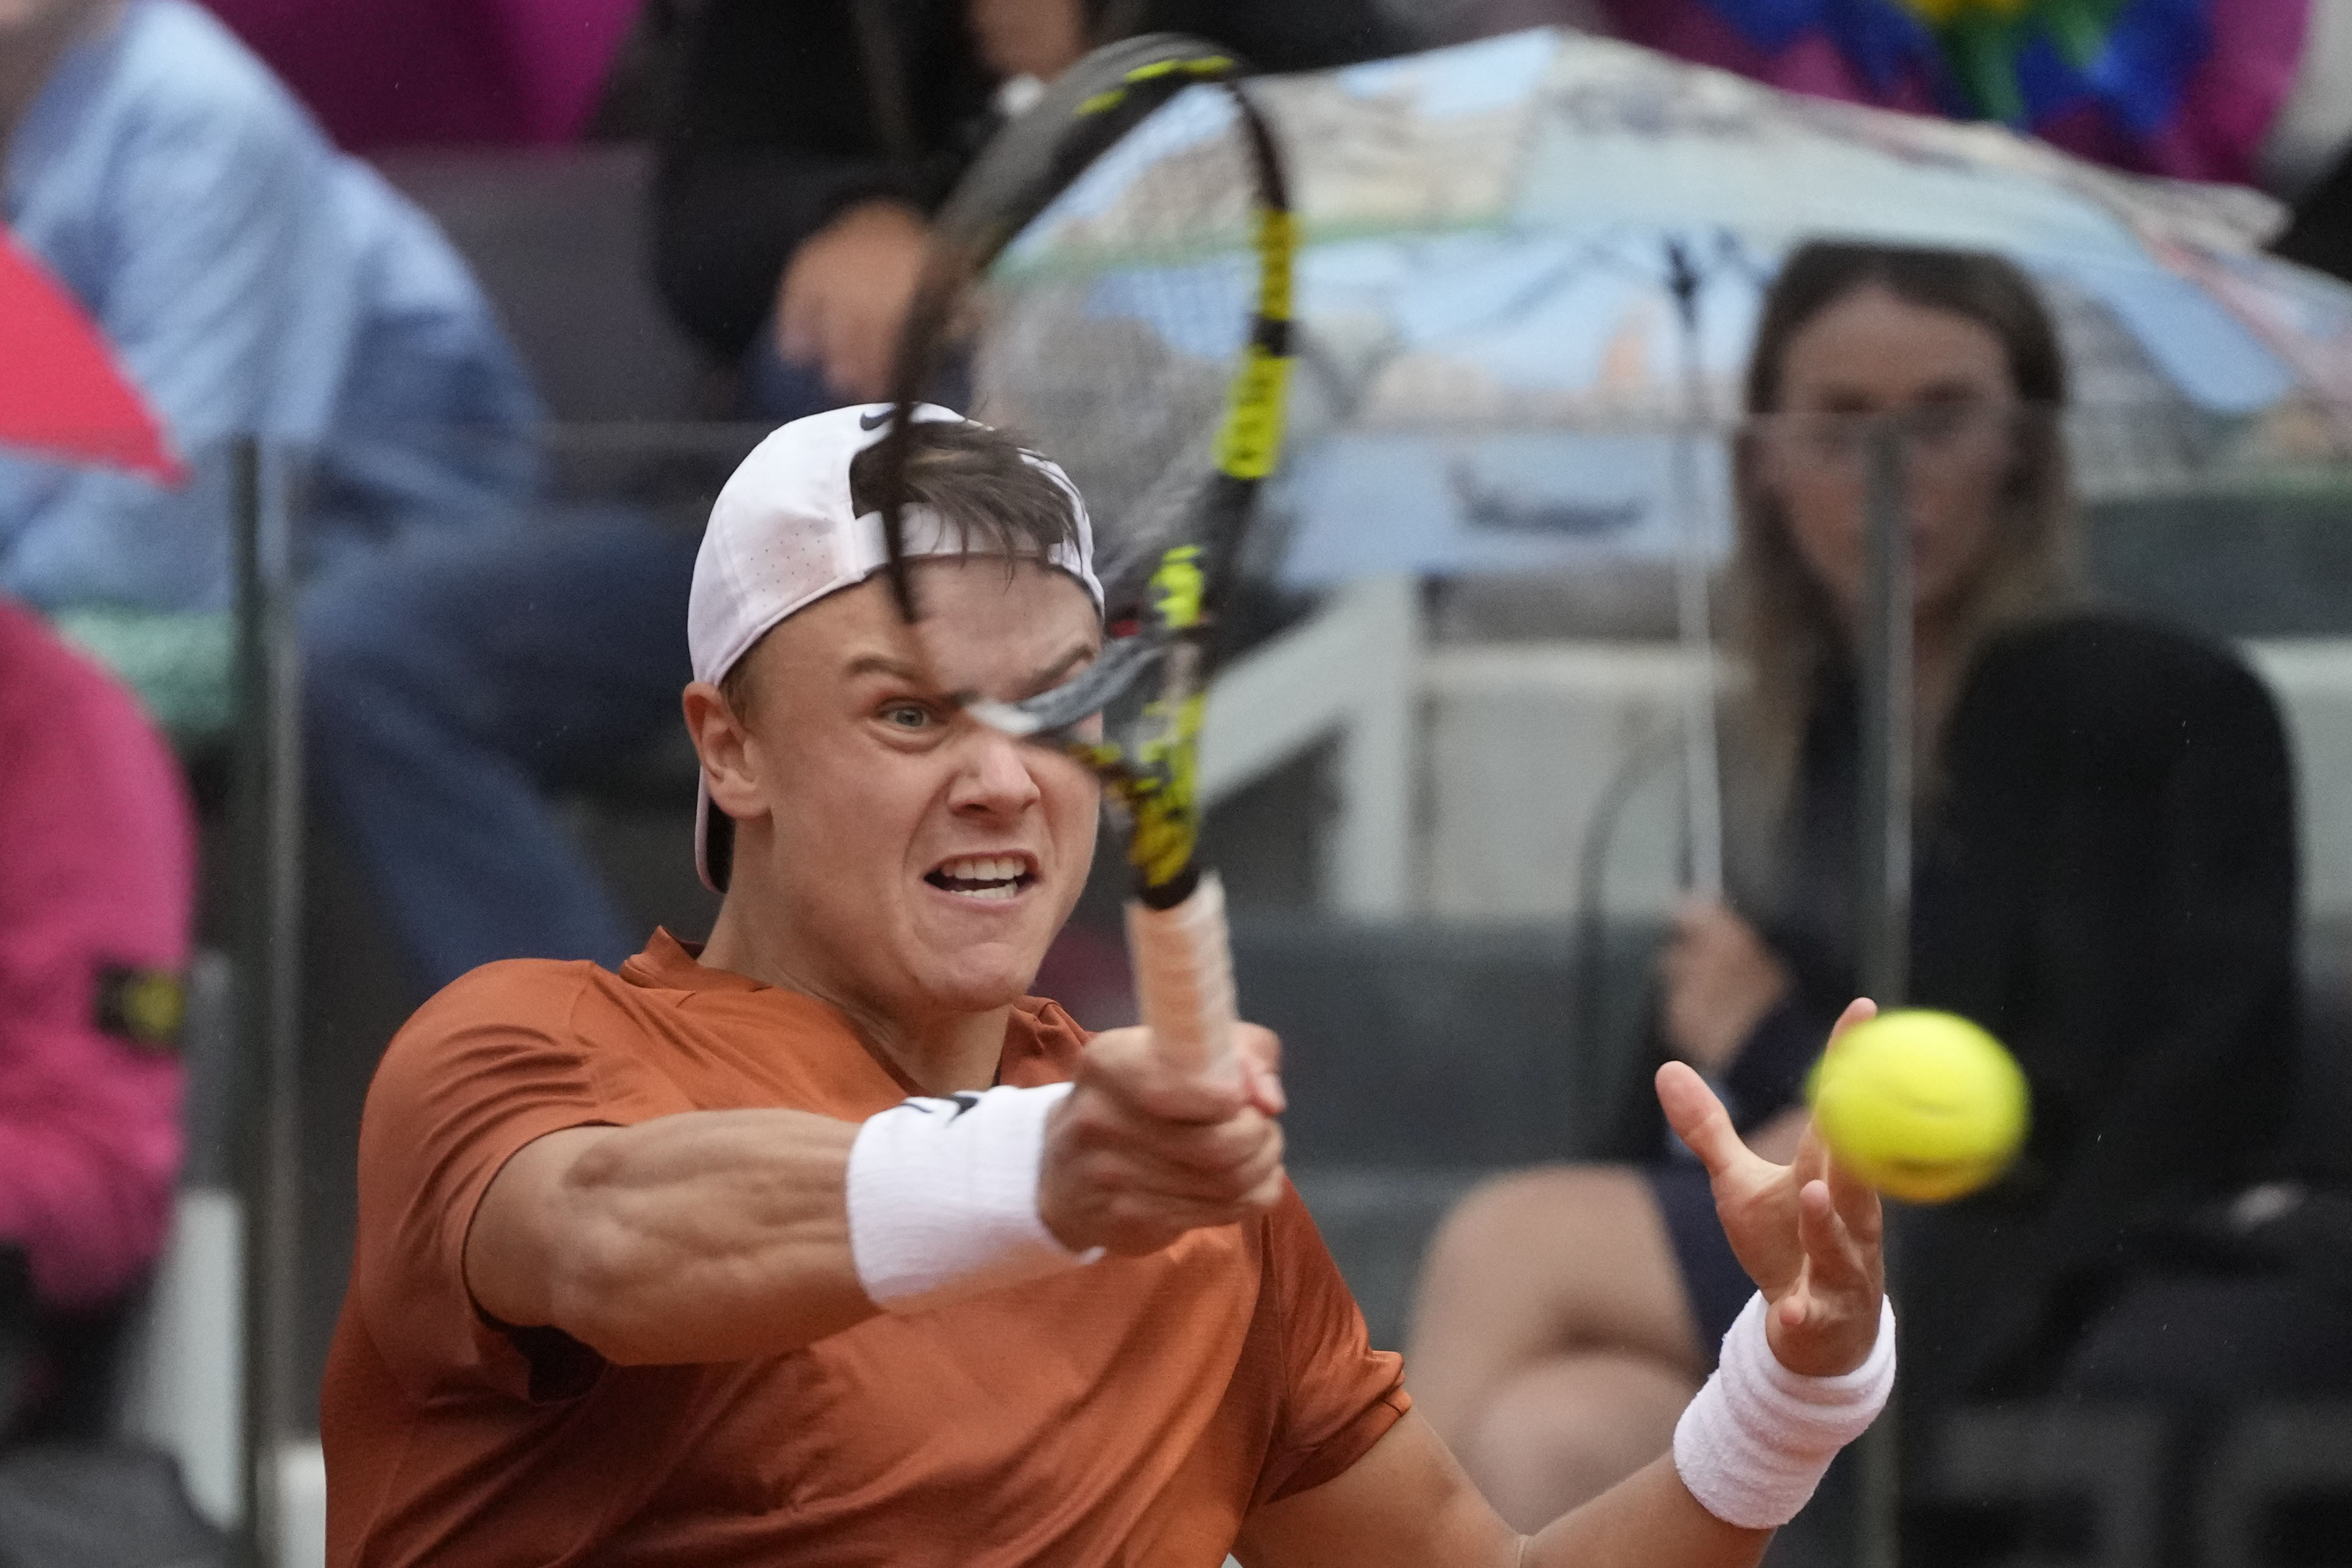 Italian Open: Holger Rune defeats Casper Ruud, reaches Rome final